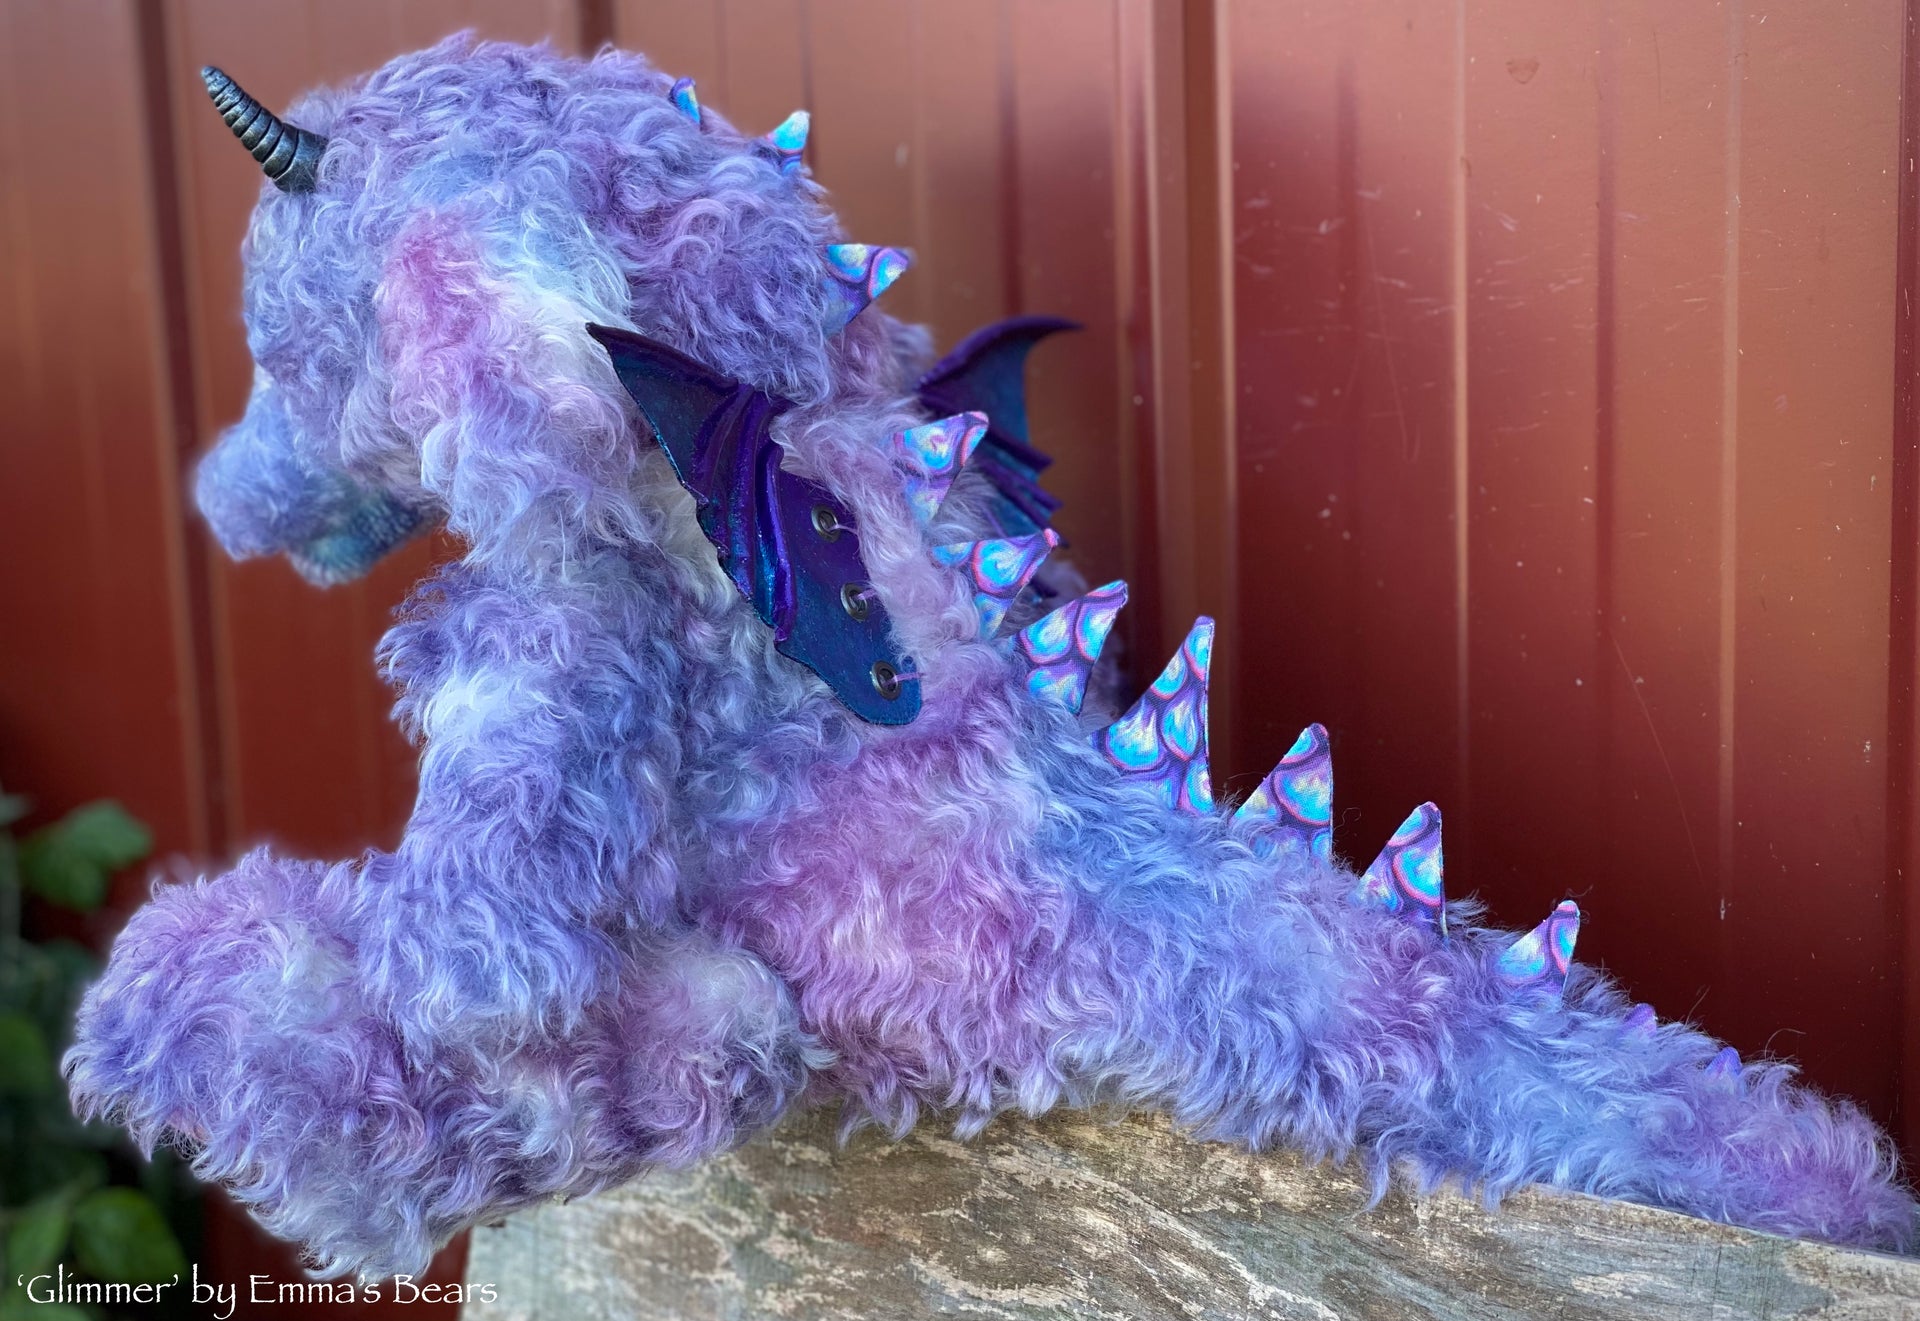 Glimmer - 15" kid mohair Artist Baby Dragon by Emmas Bears - OOAK